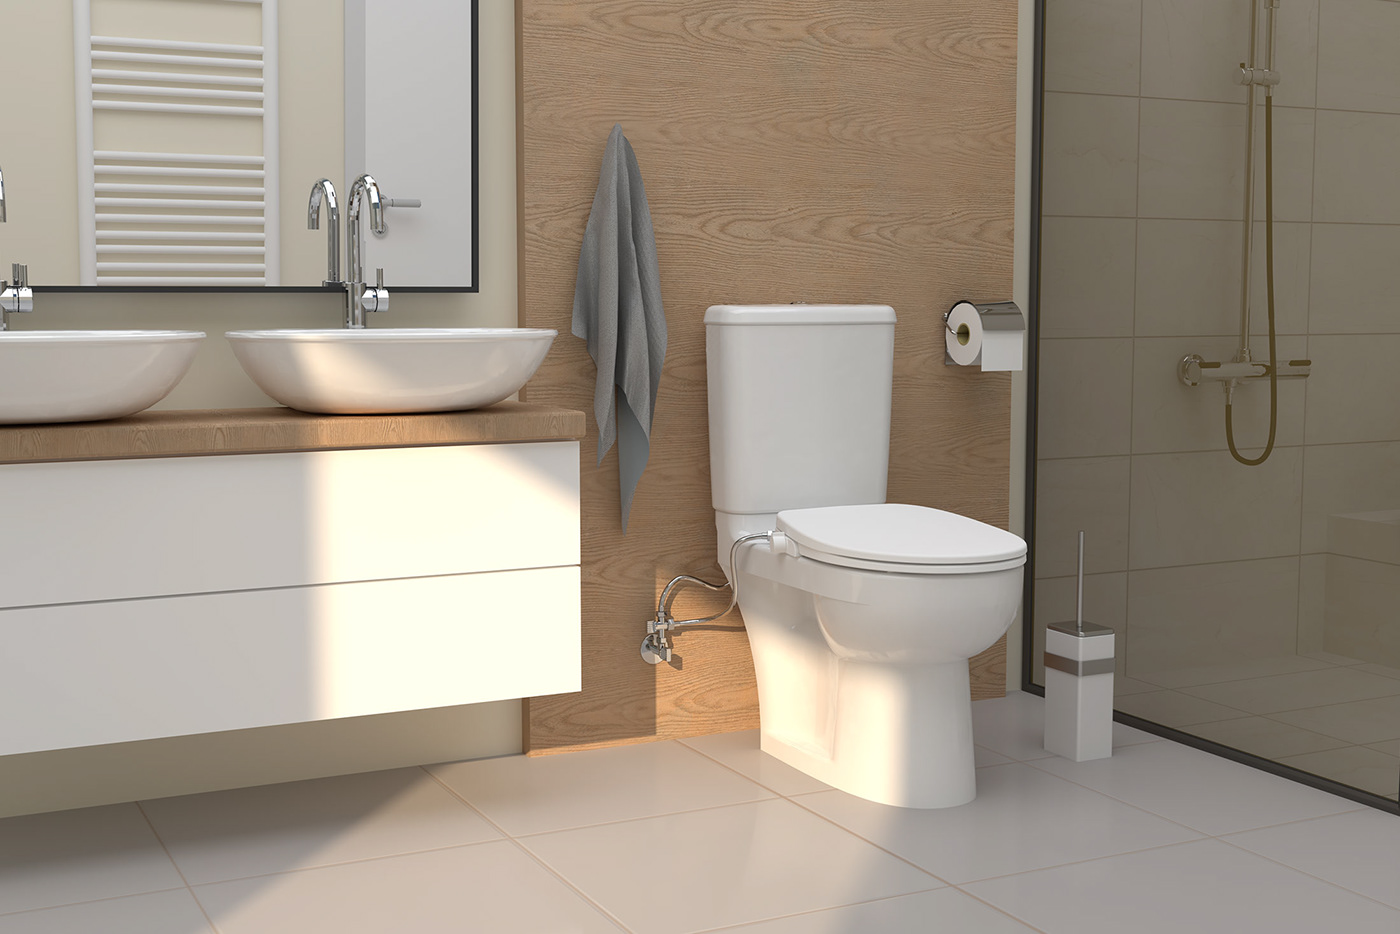 3D 3d modeling rendering toilet seat wc